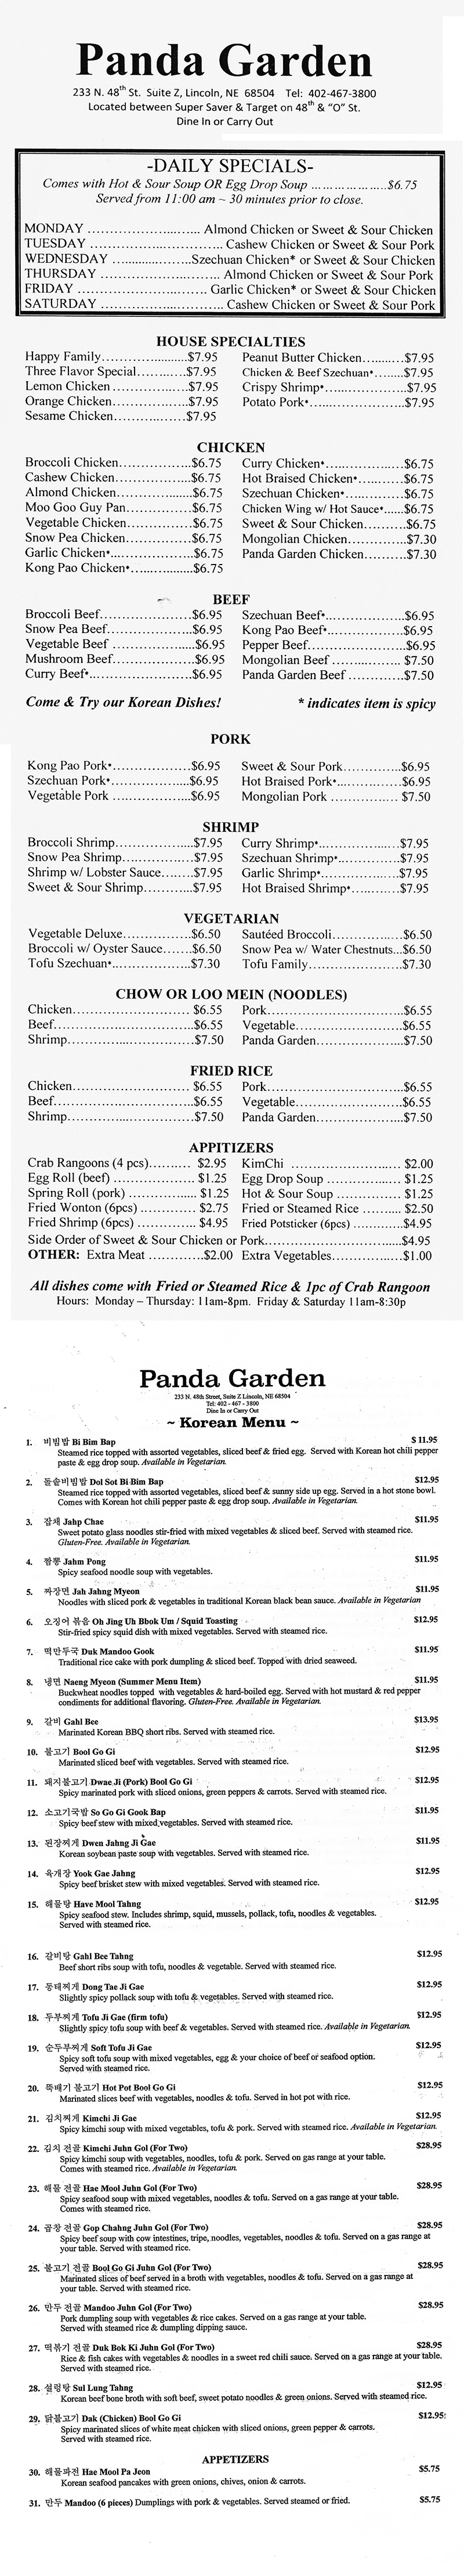 Panda Garden - Chinese & Korean Restaurant Menu - Lincoln Nebraska - Page 1